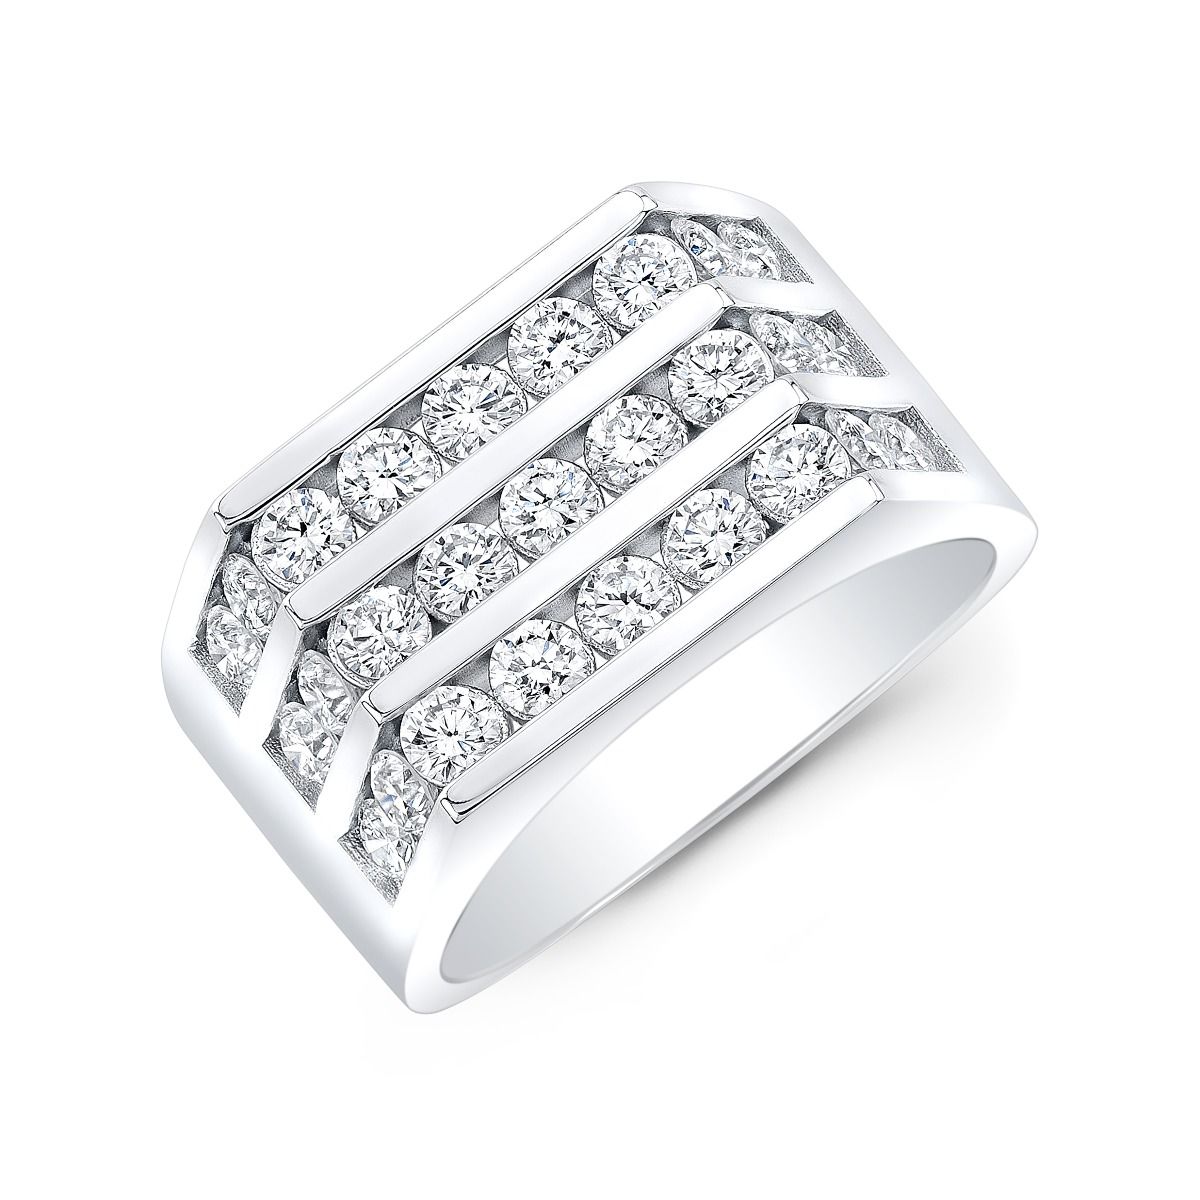 Buy Neo Round Diamond Ring For Men Online